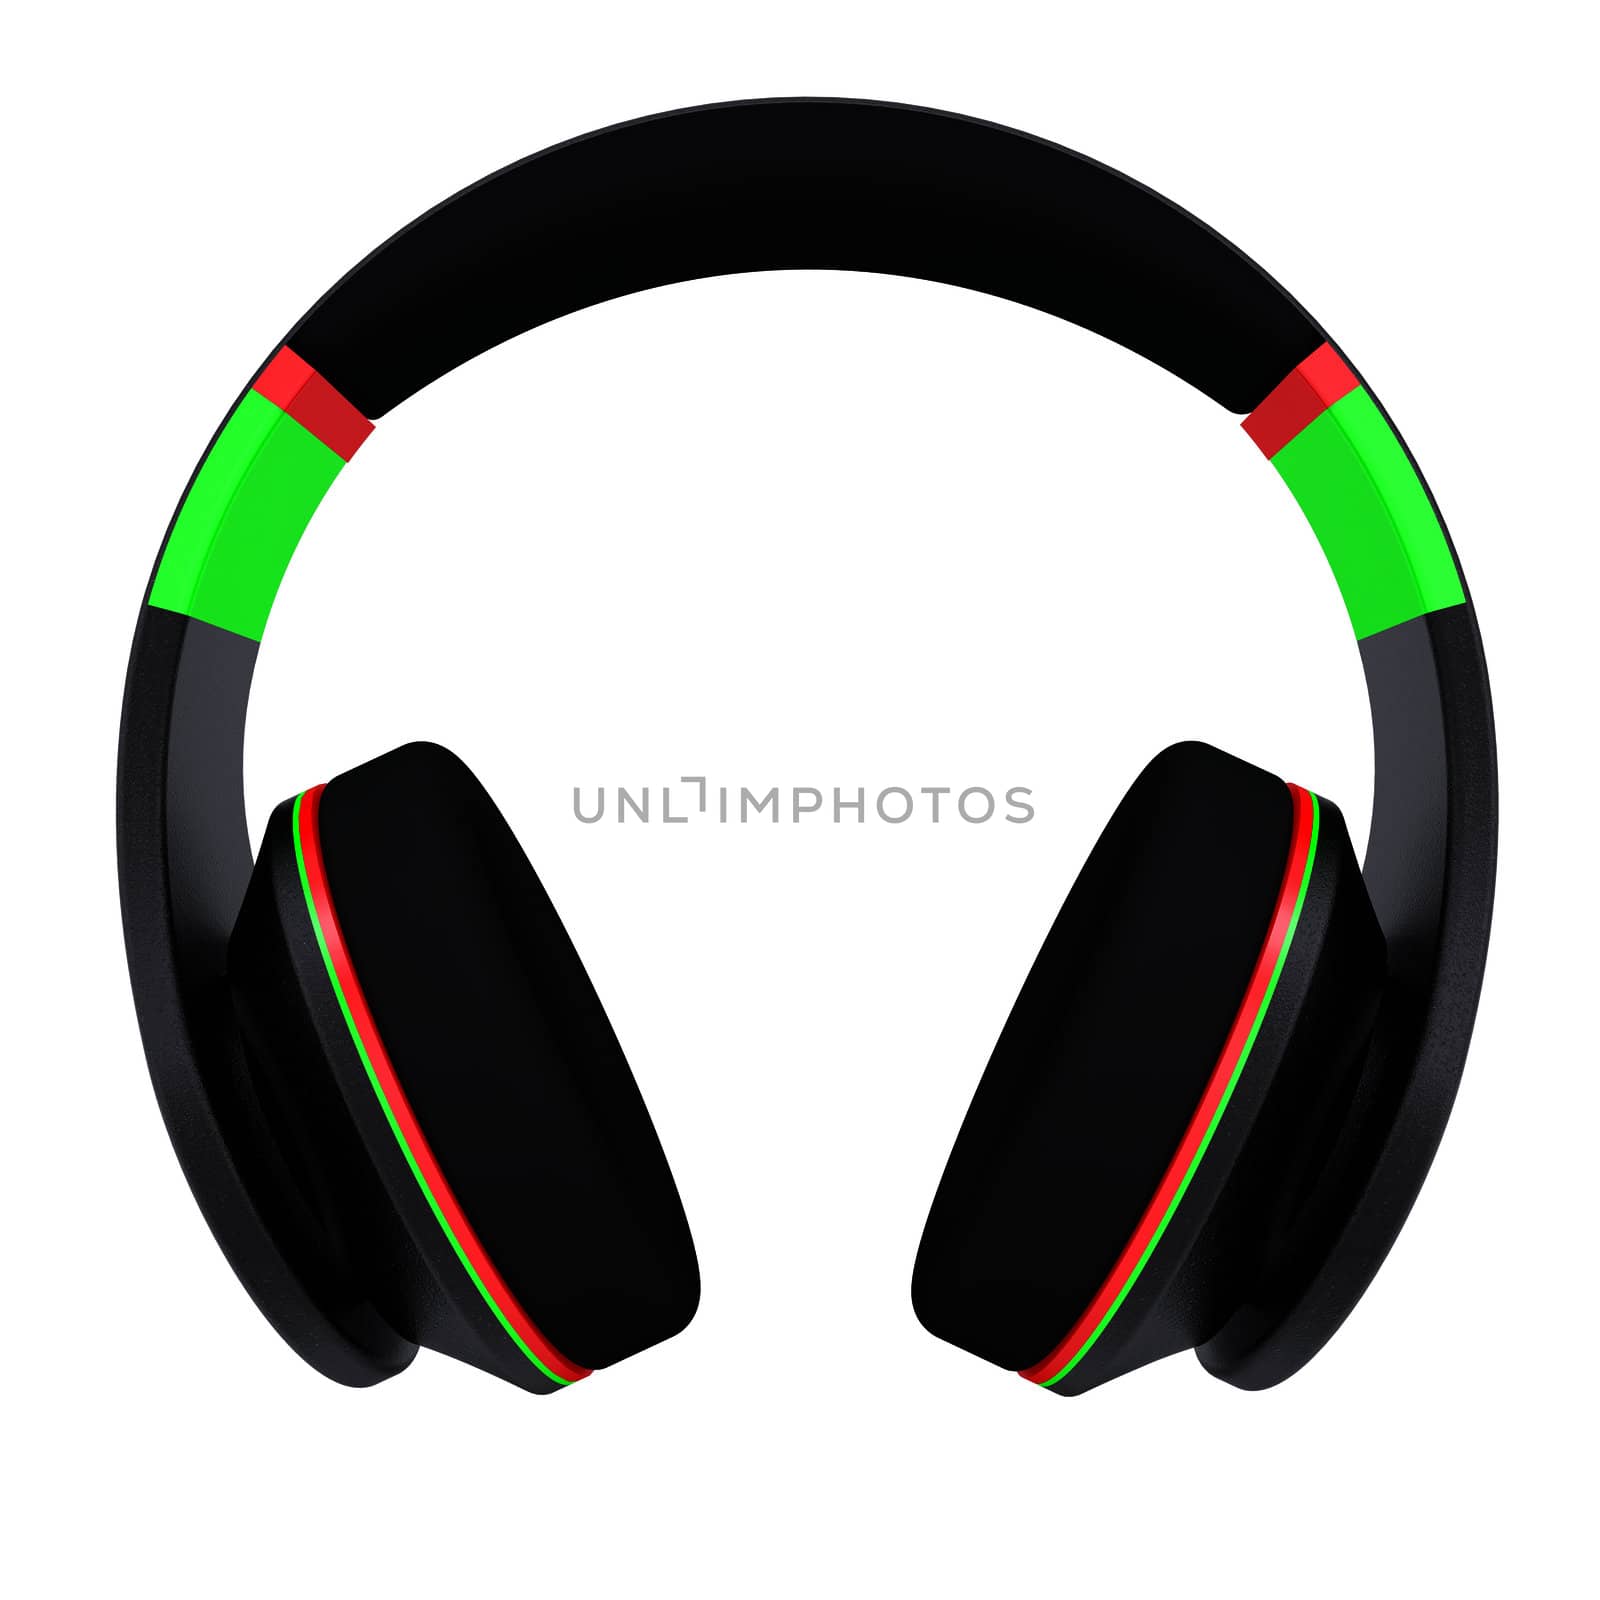 Stylish black headphones by cherezoff